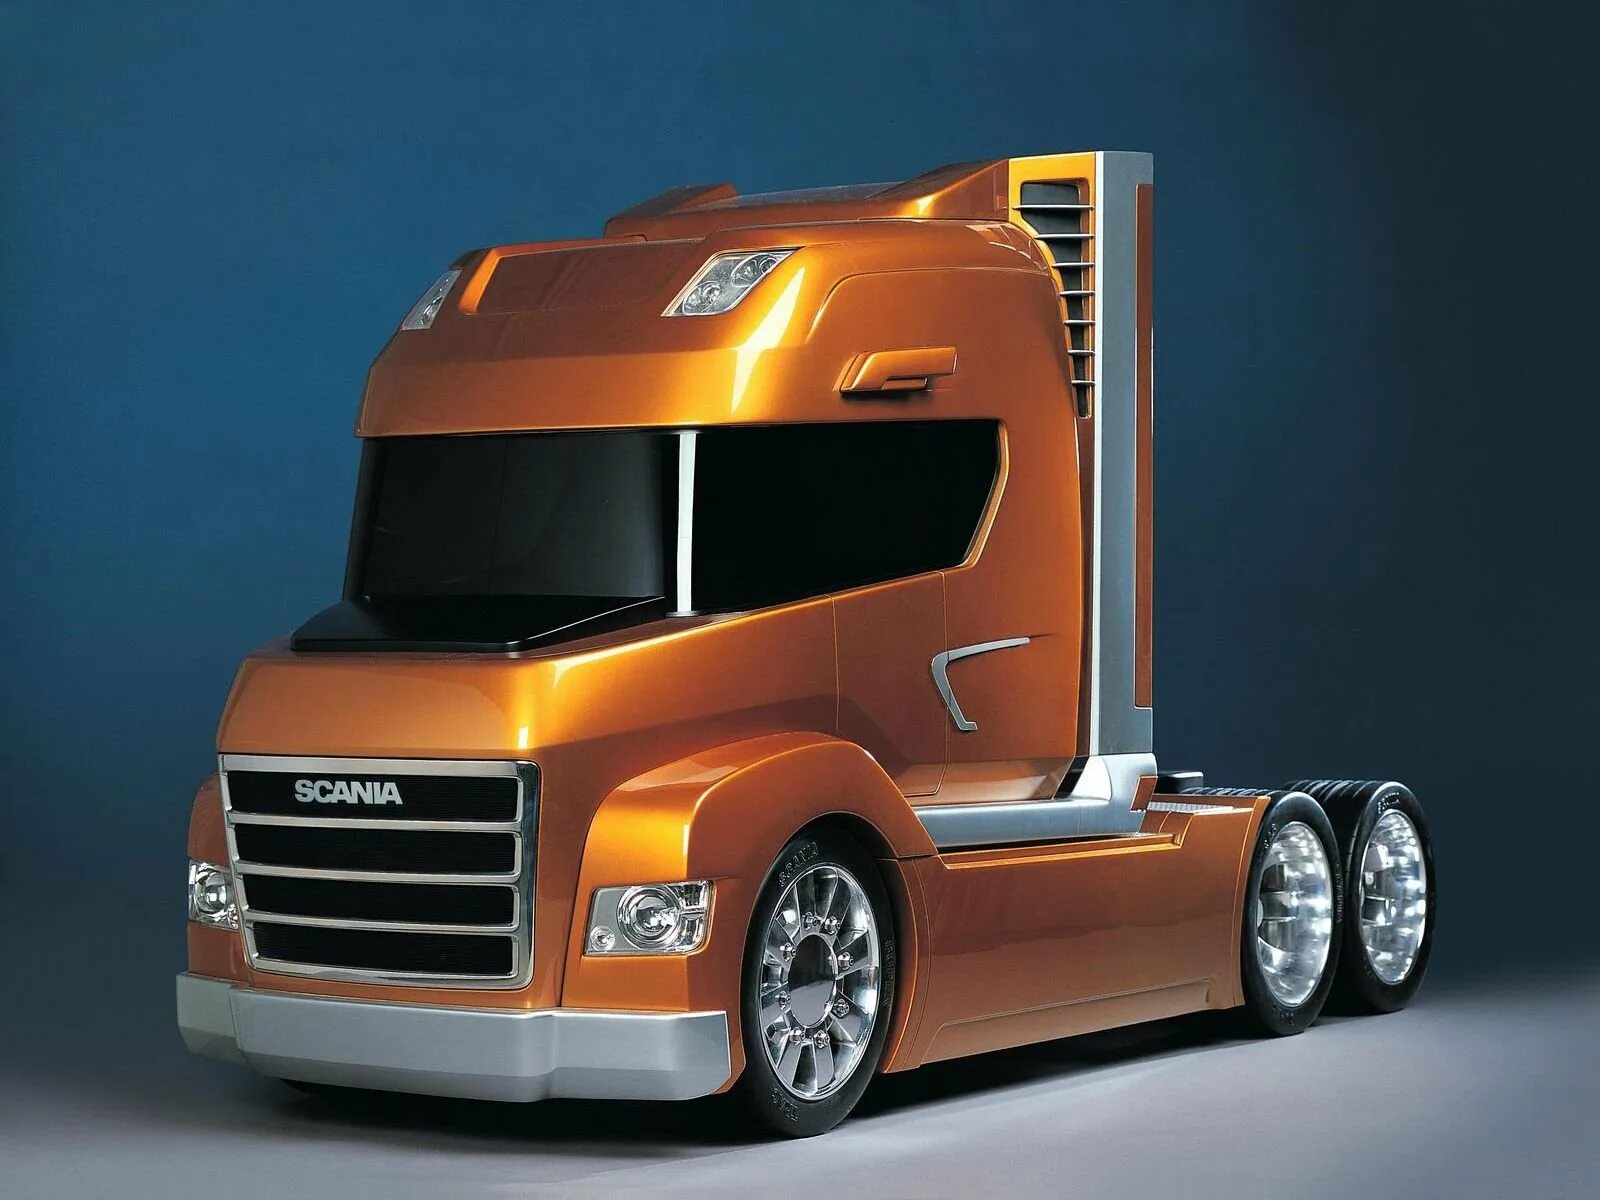 Легковушки етс. Scania Stax Concept 2002. Скания тягачи 2020 концепт. Американский грузовик Скания. Грузовик Скания Вабис.